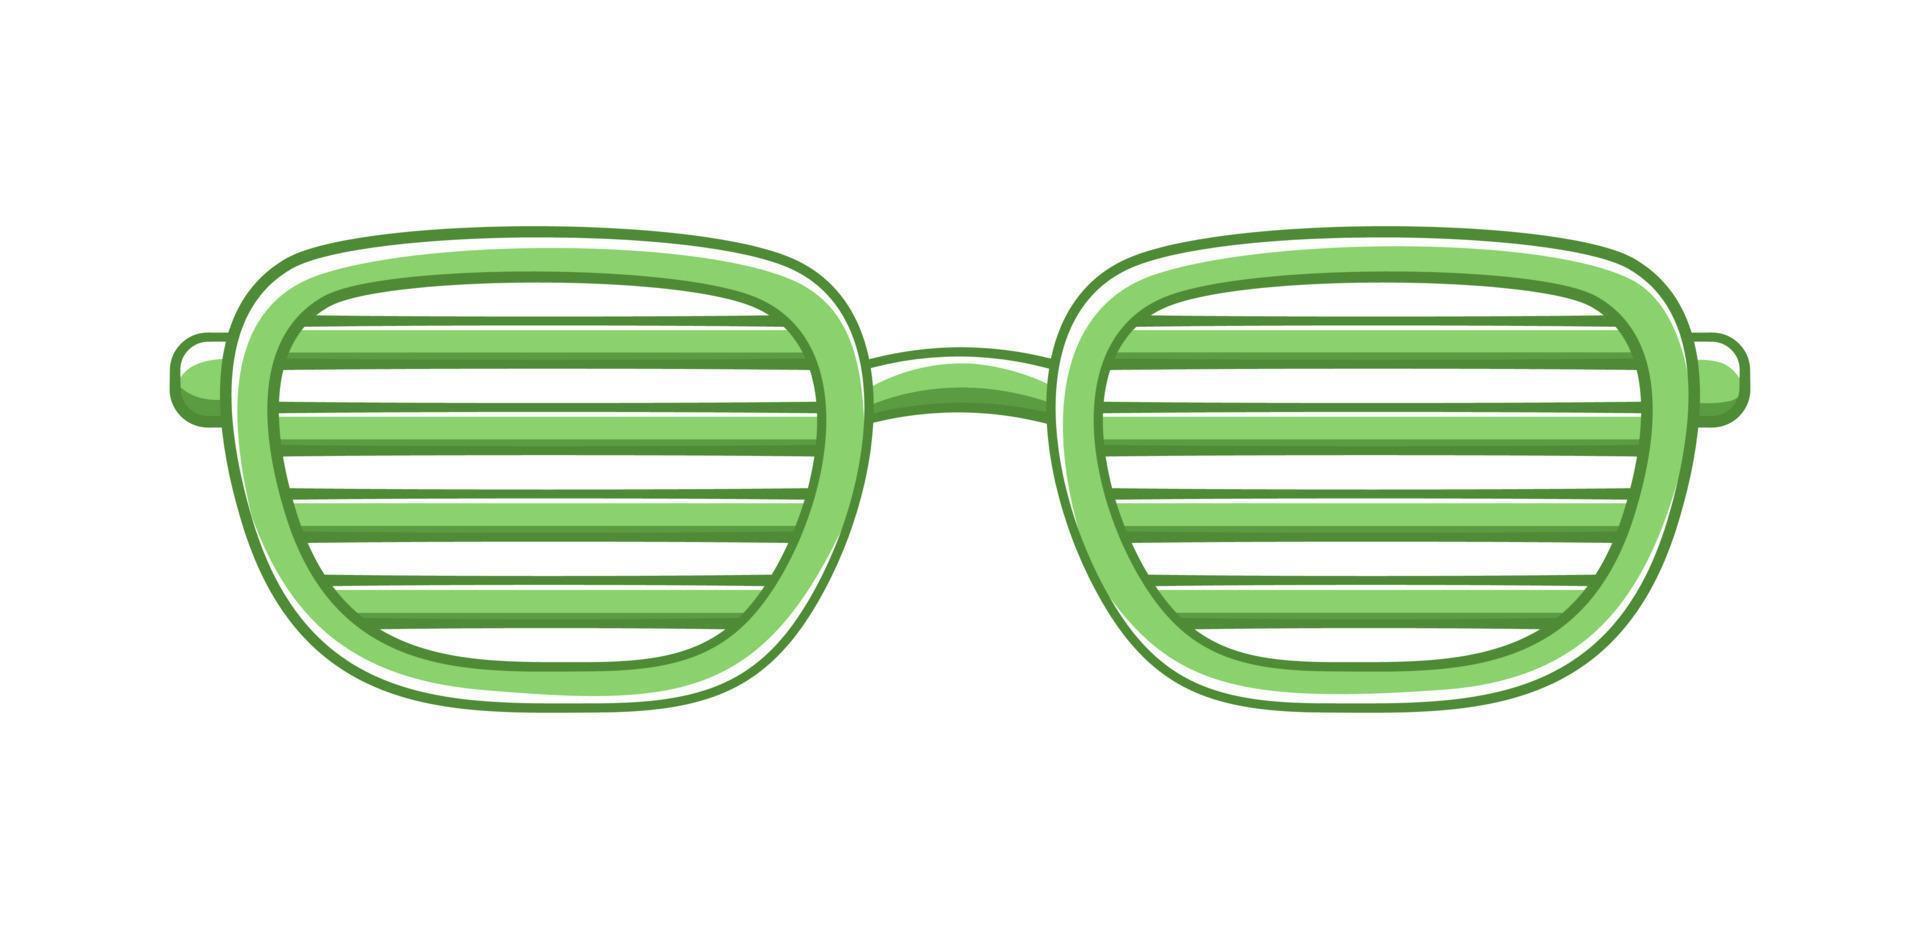 kalk grön slutare nyanser ClipArt. skraj fest glasögon vektor illustration.